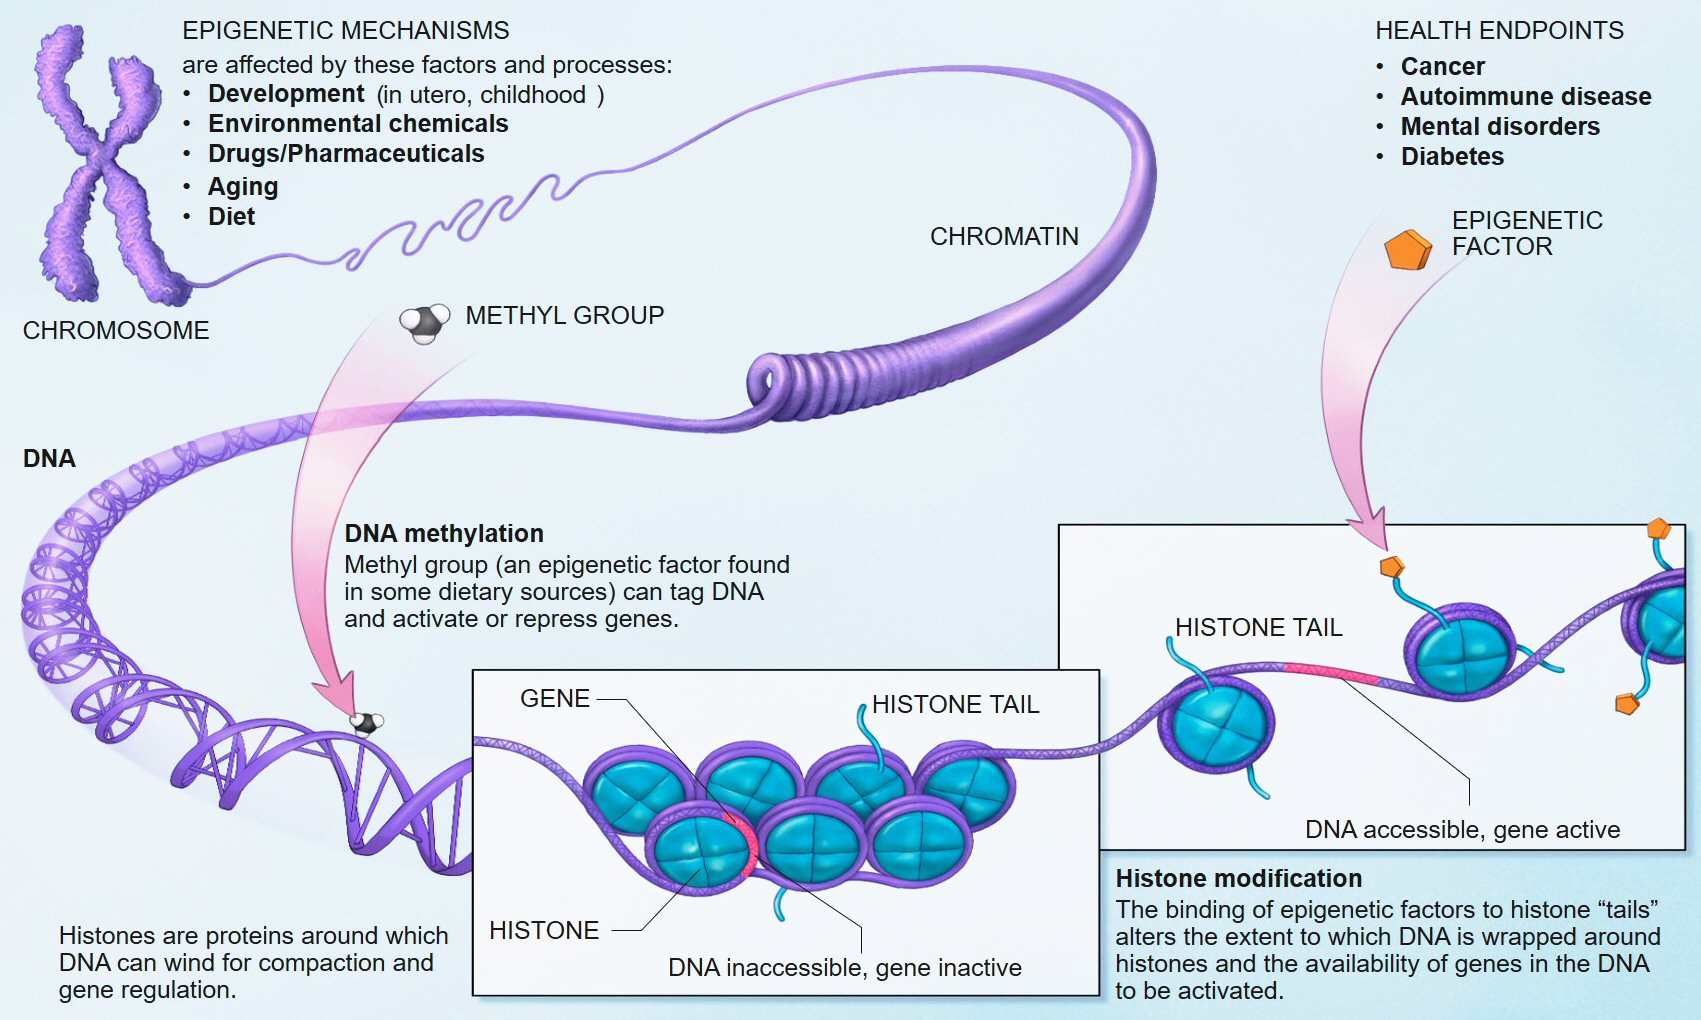 Epigenetic_mechanisms.jpg